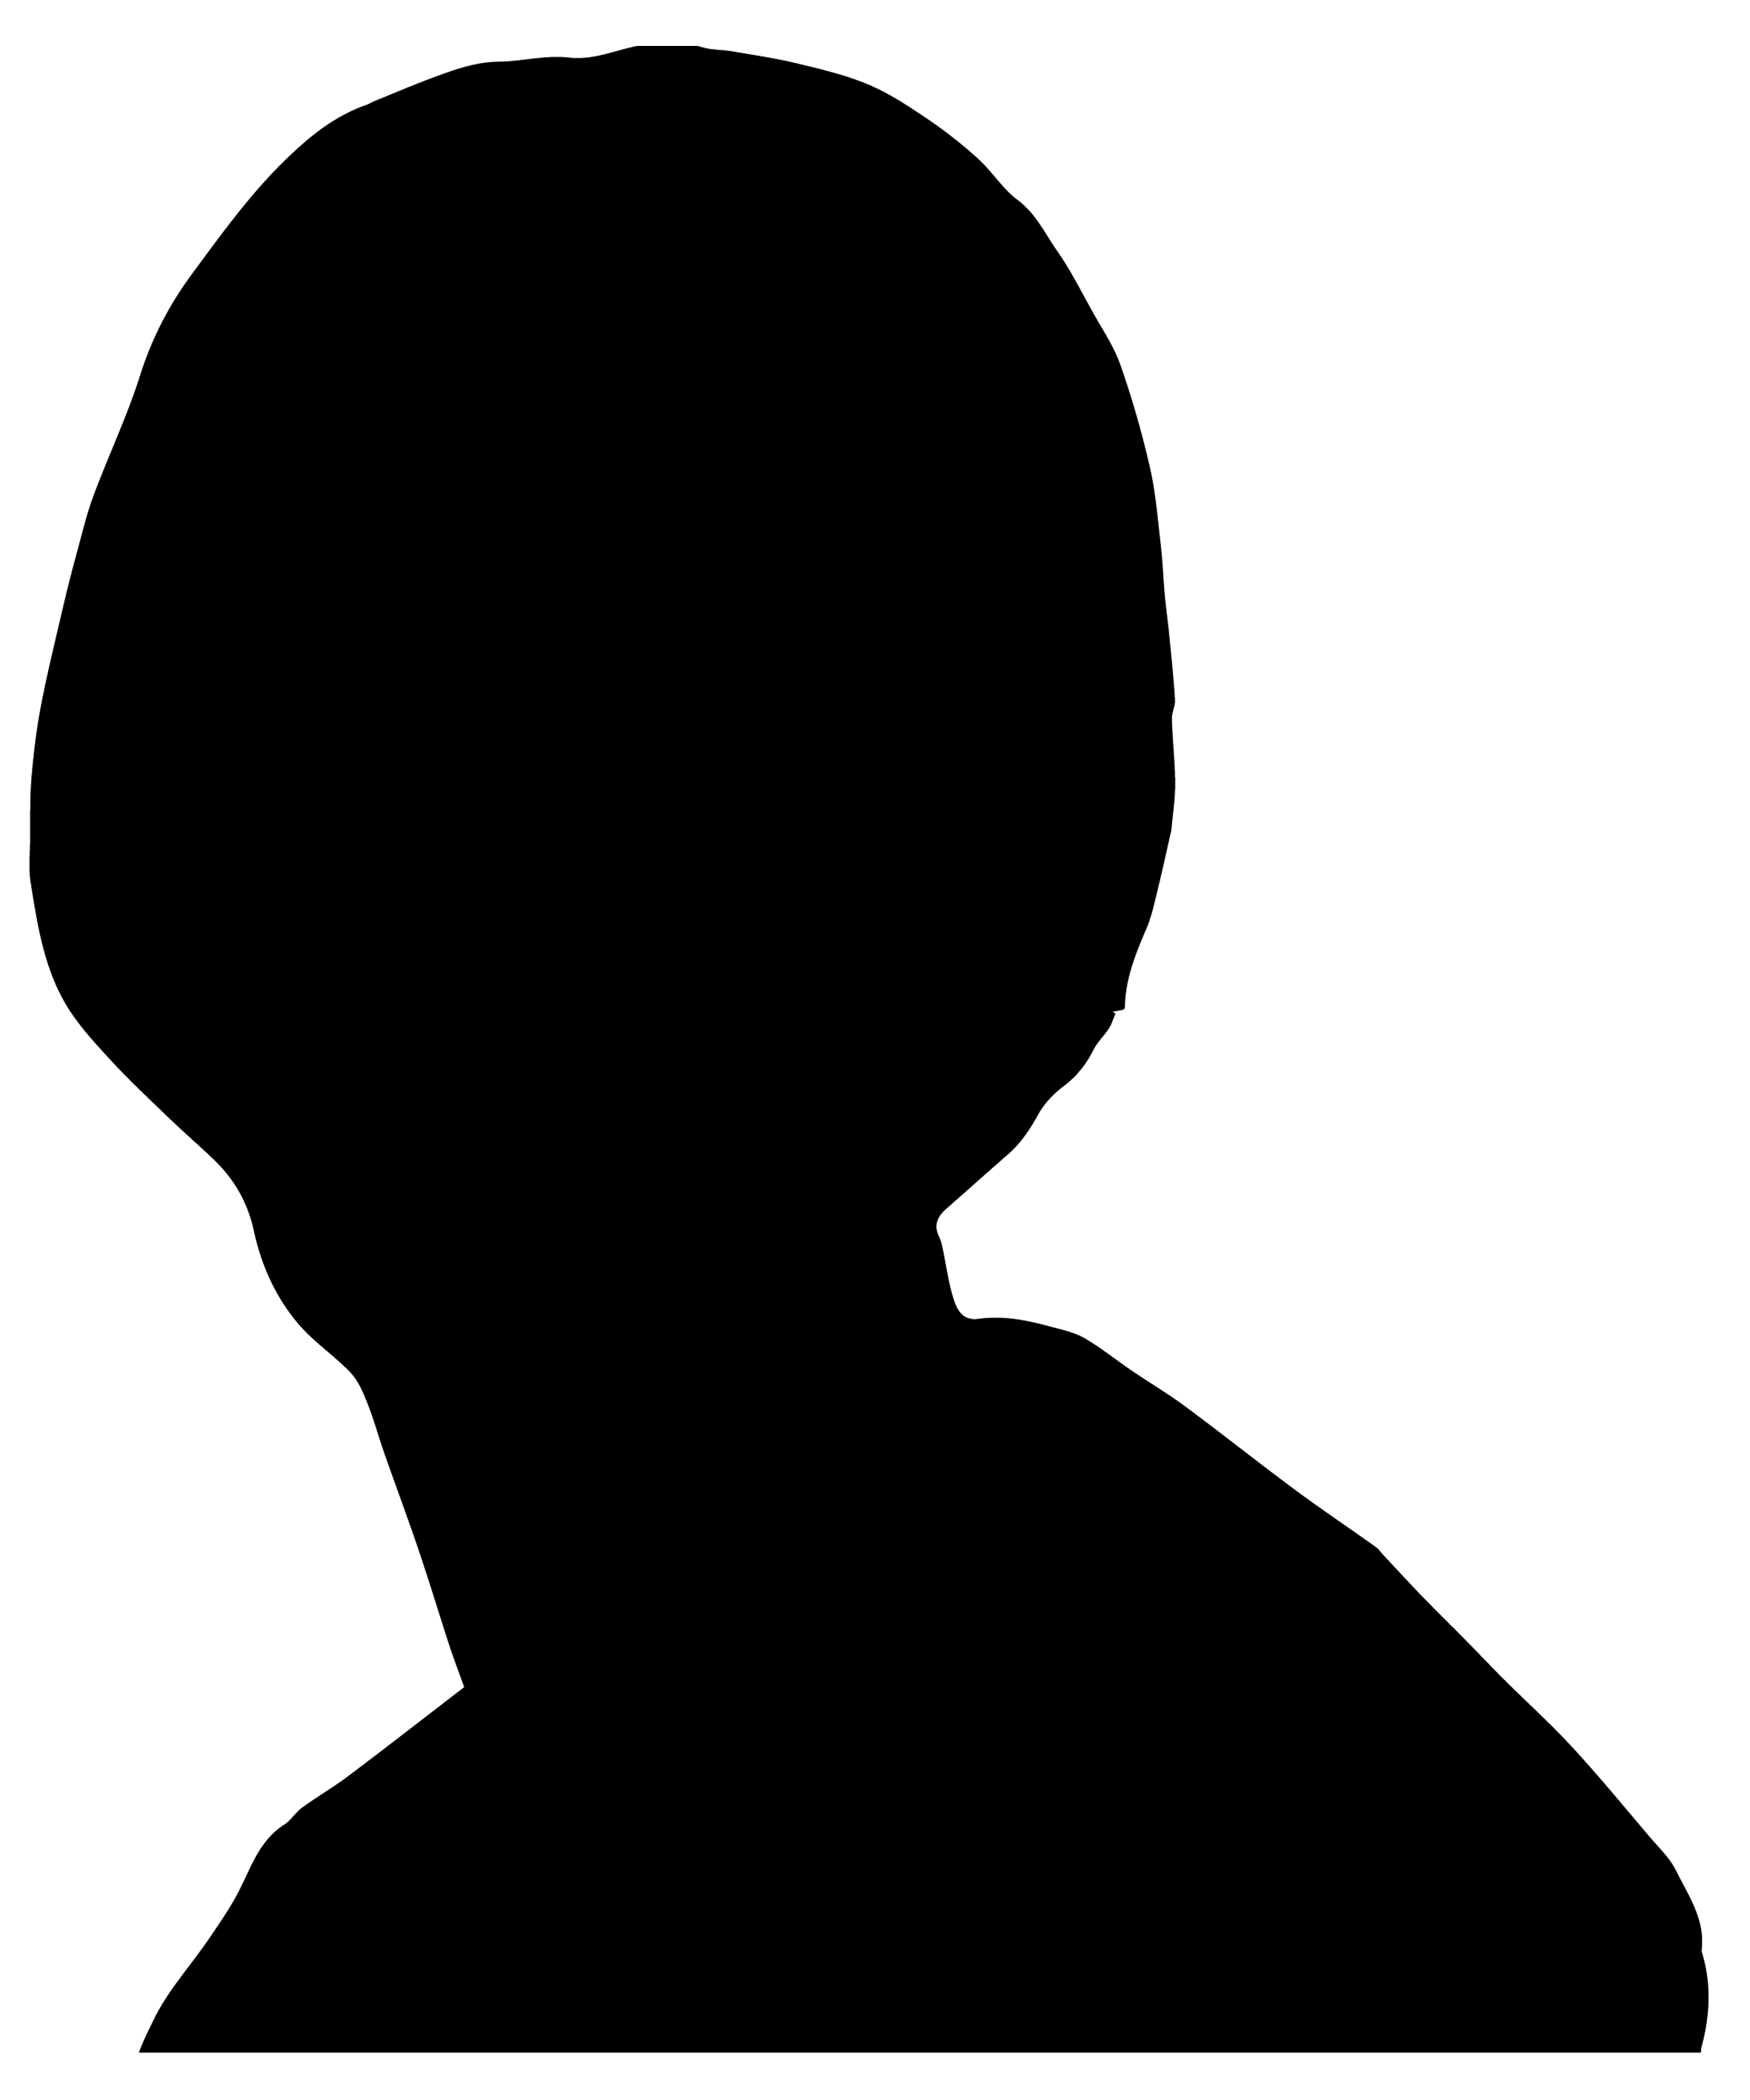 Black silhouette of Alice Paul